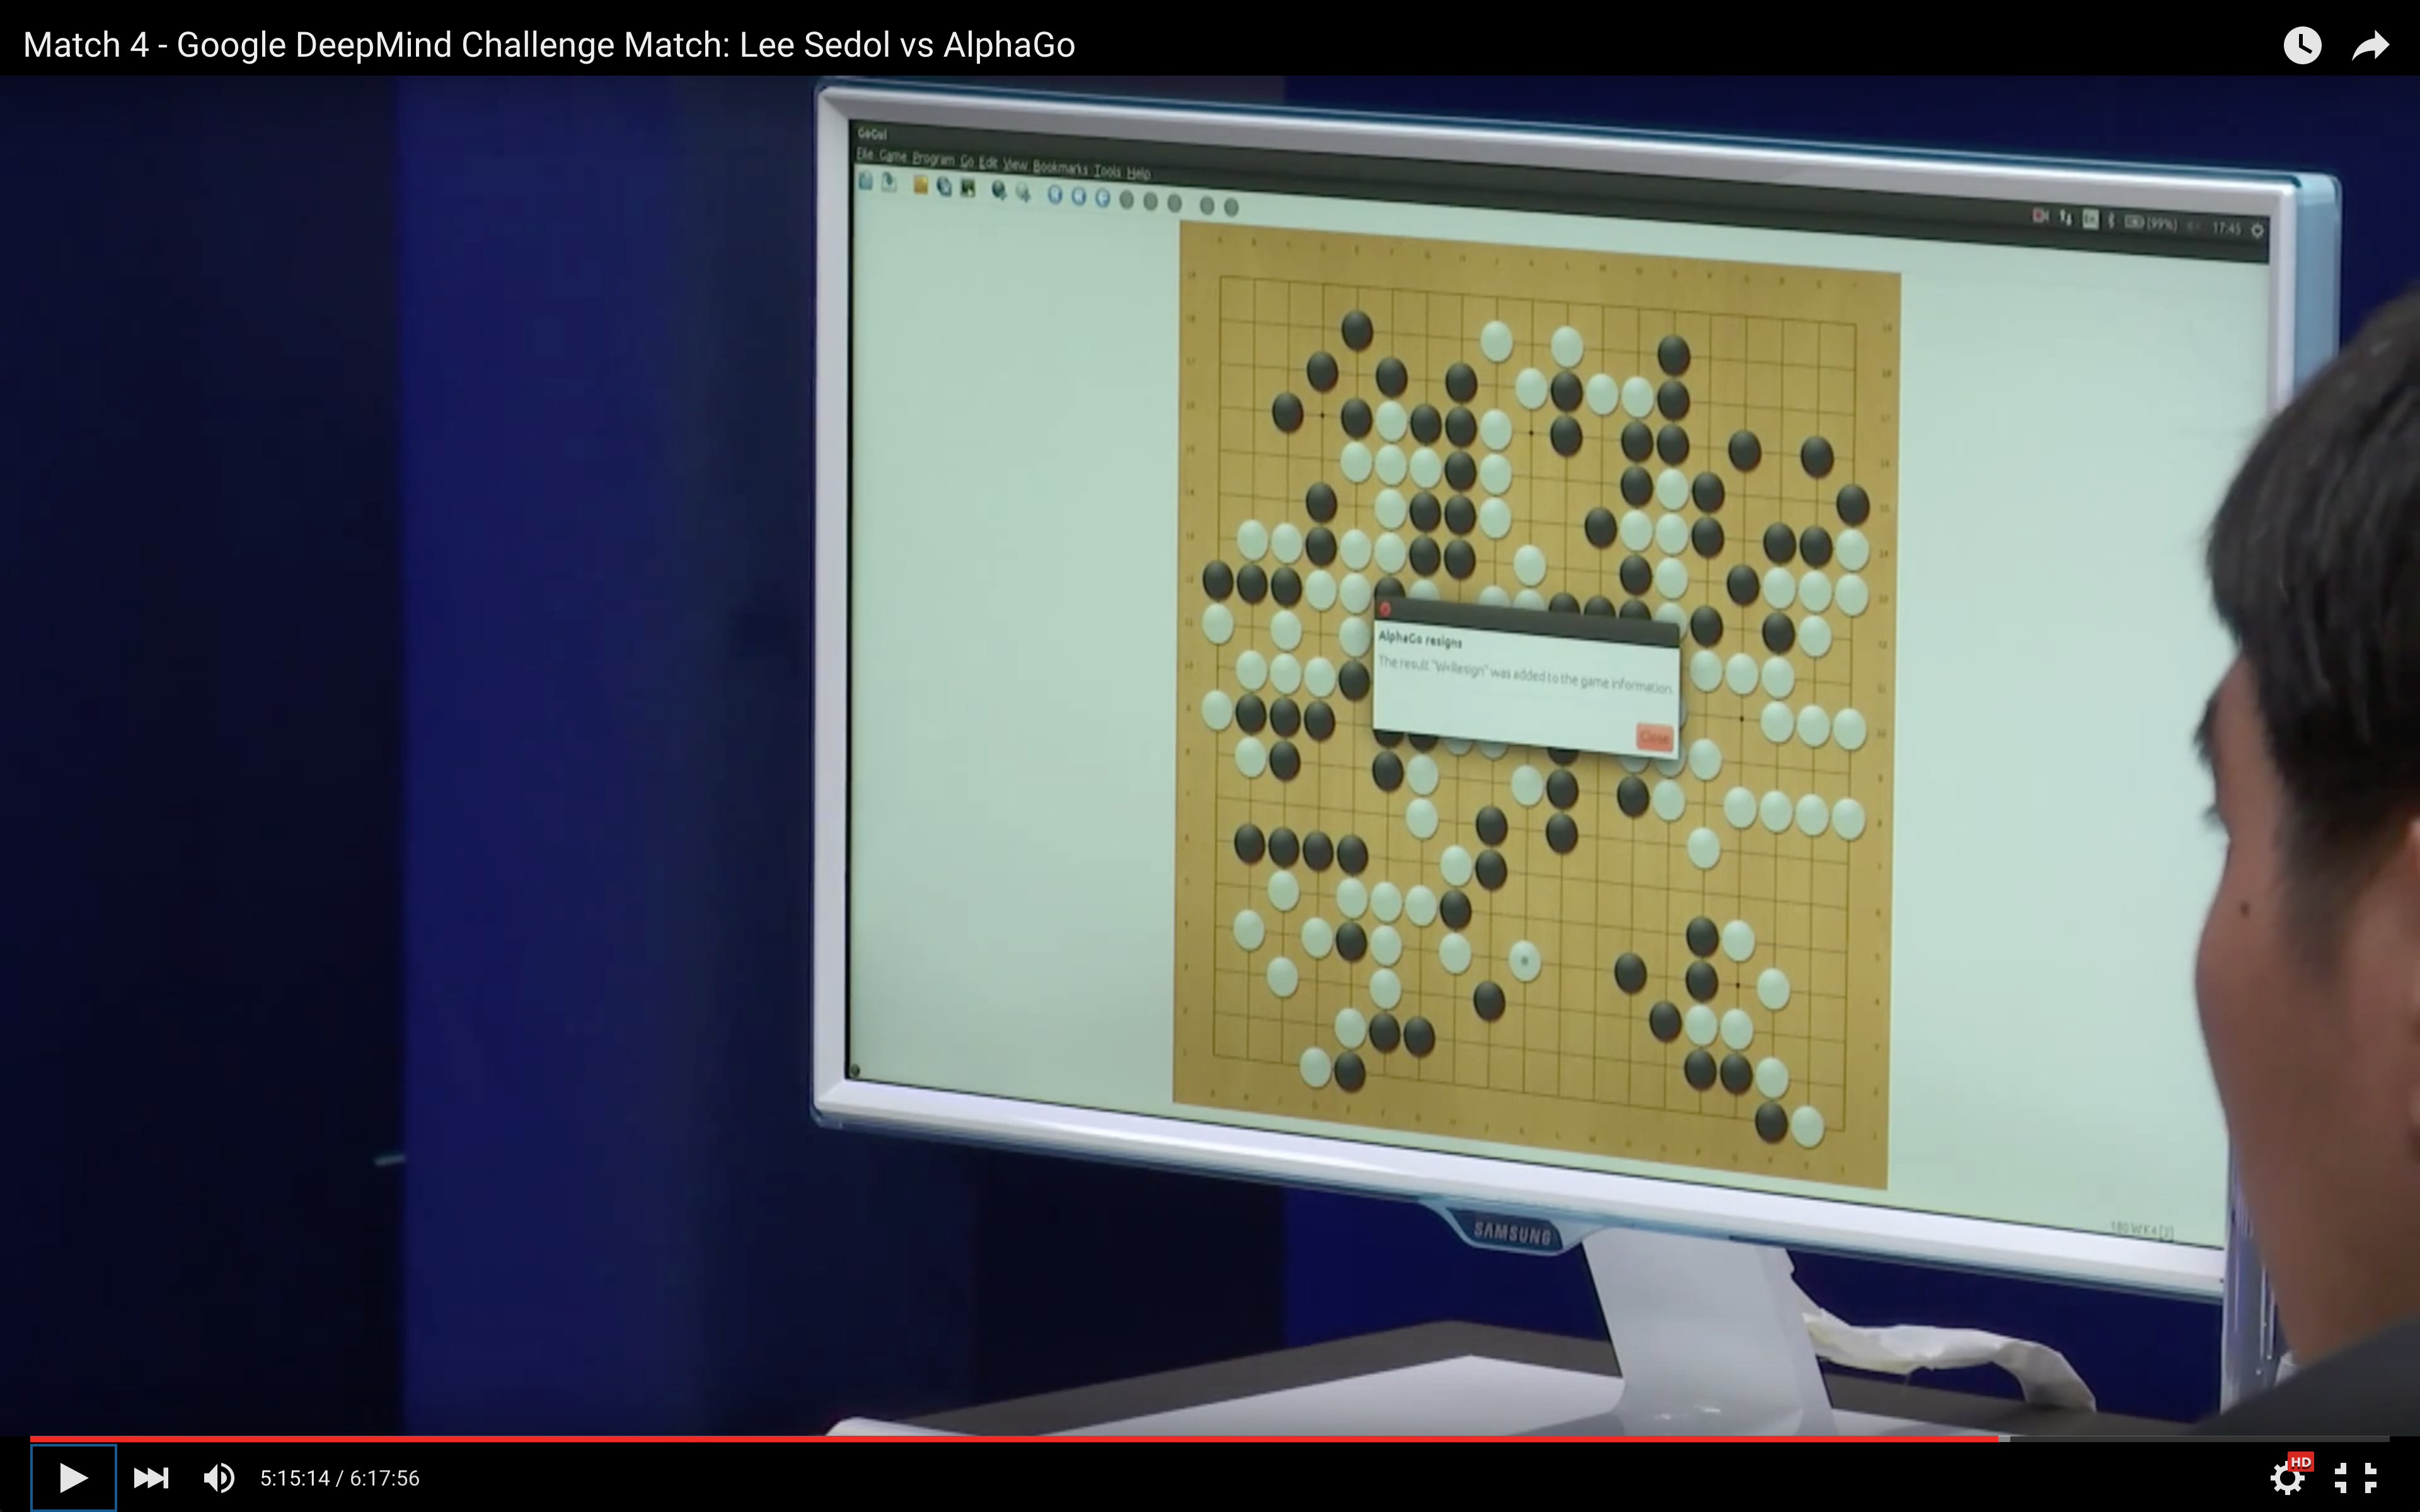 Match 4 - Google DeepMind Challenge Match: Lee Sedol vs AlphaGo